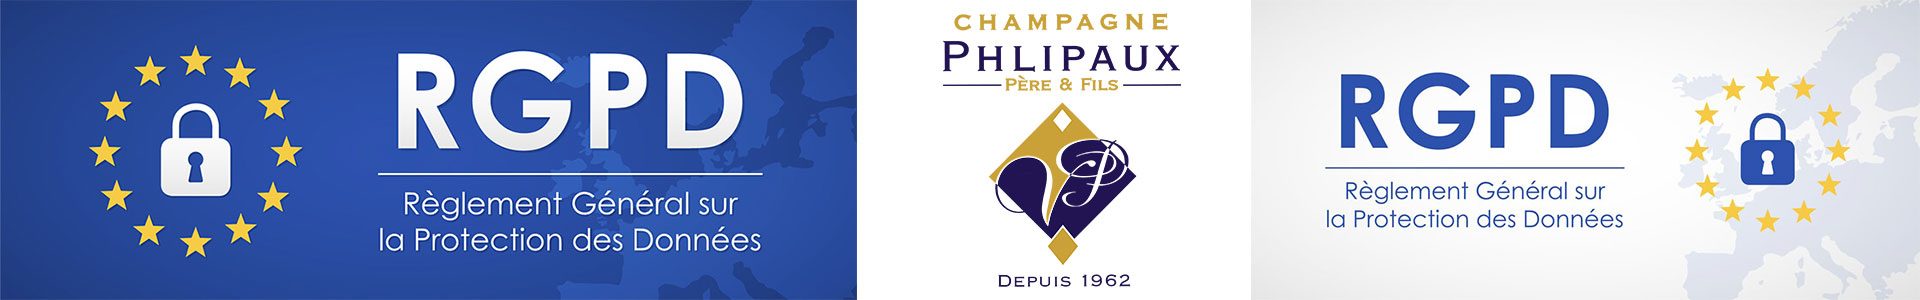 RGPD-Champagne-Phlipaux-Pere-&-Fils